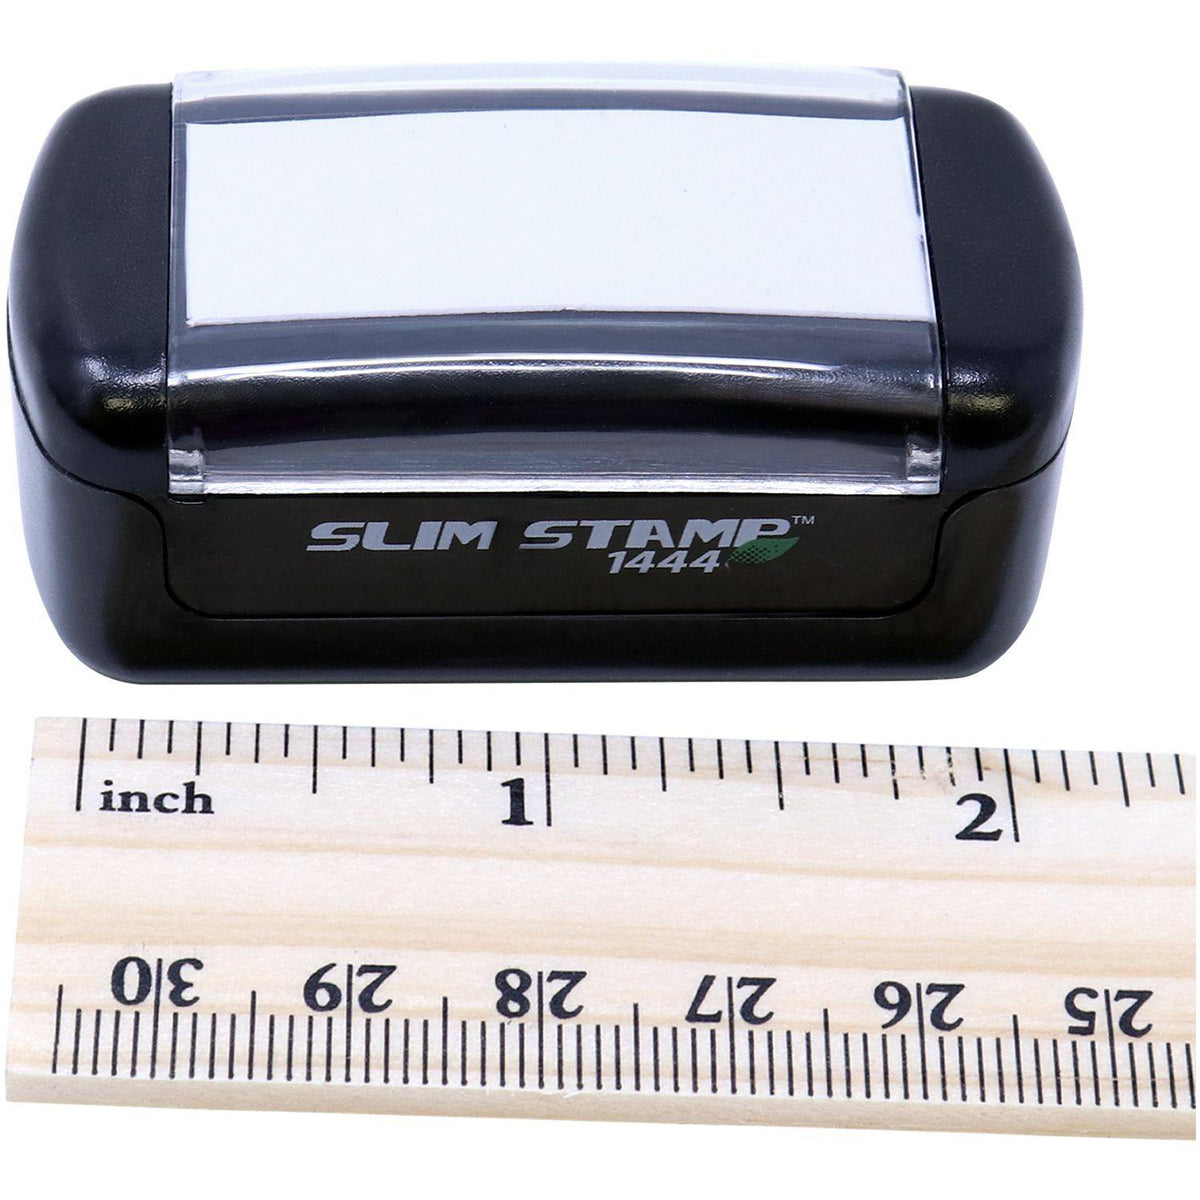 Measurement Slim Pre-Inked Printed Matter Stamp with Ruler